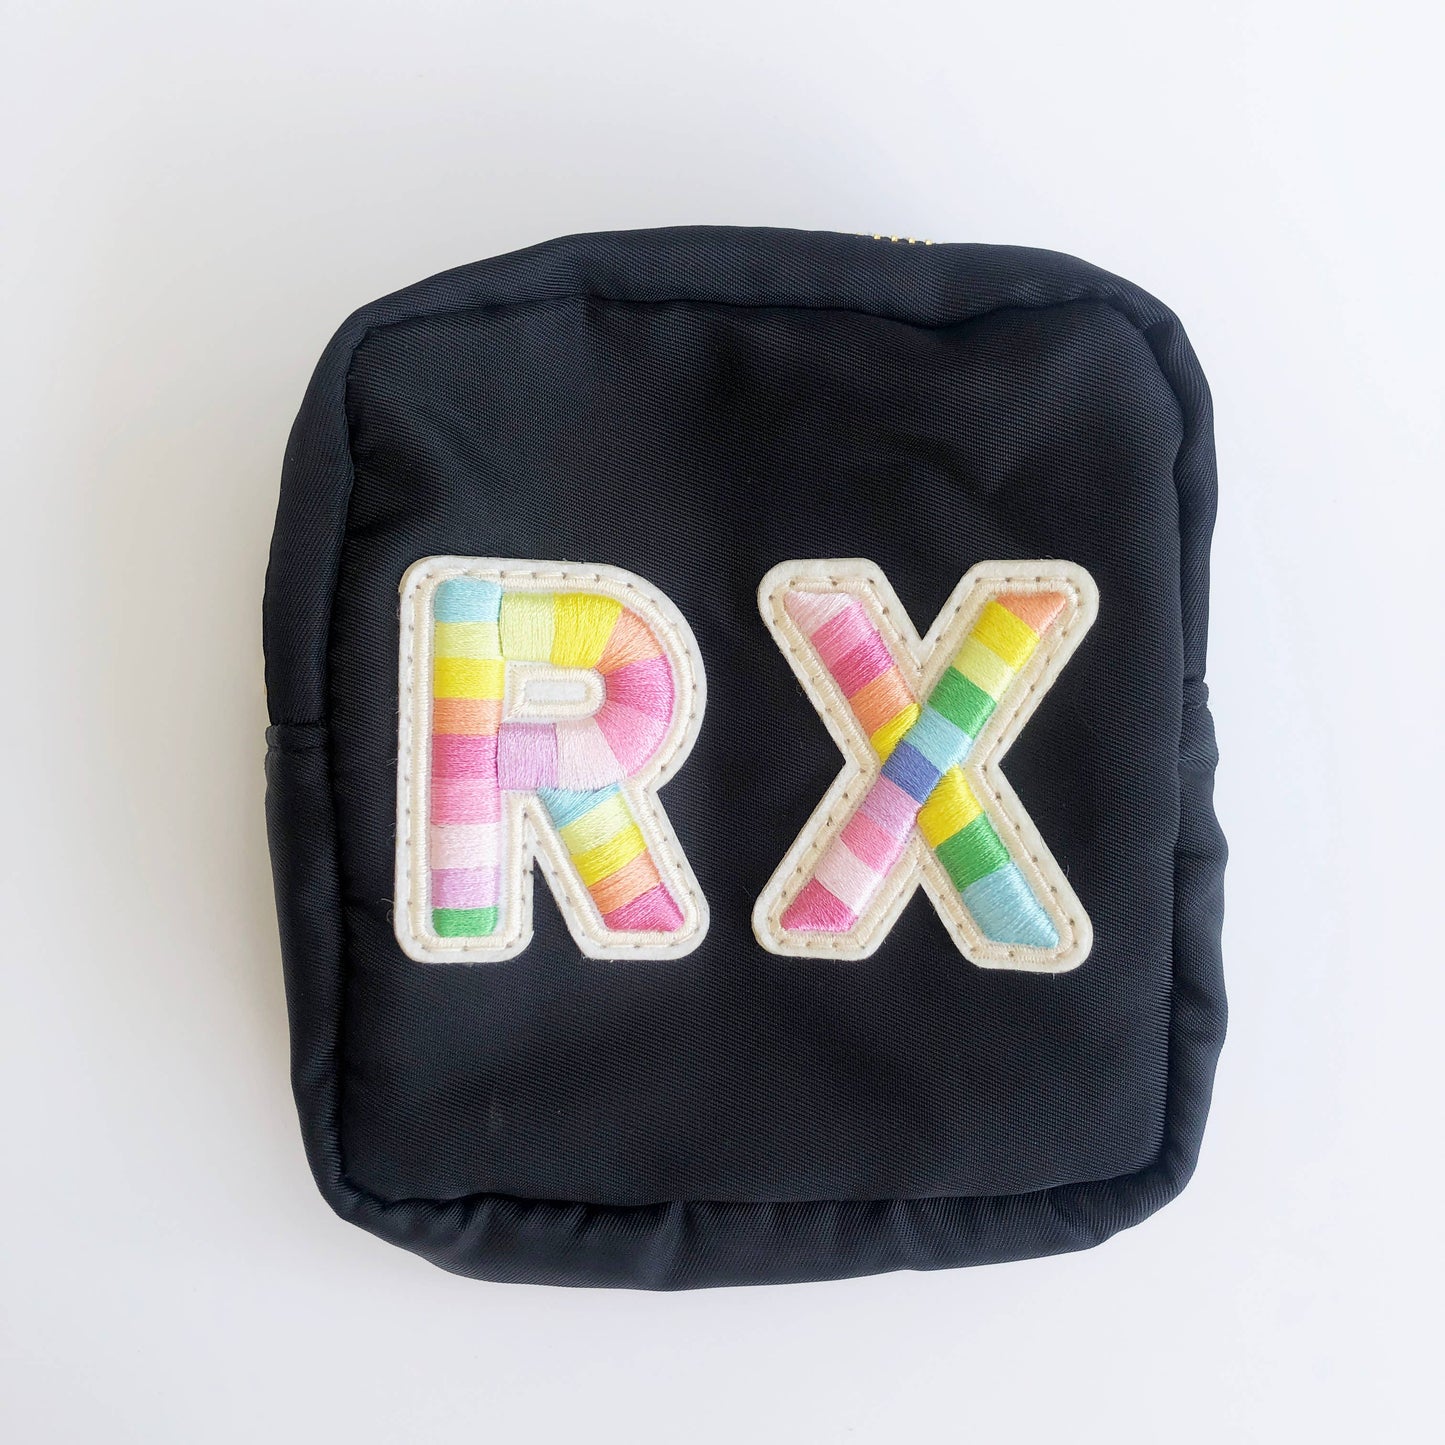 Medicine RX Bag